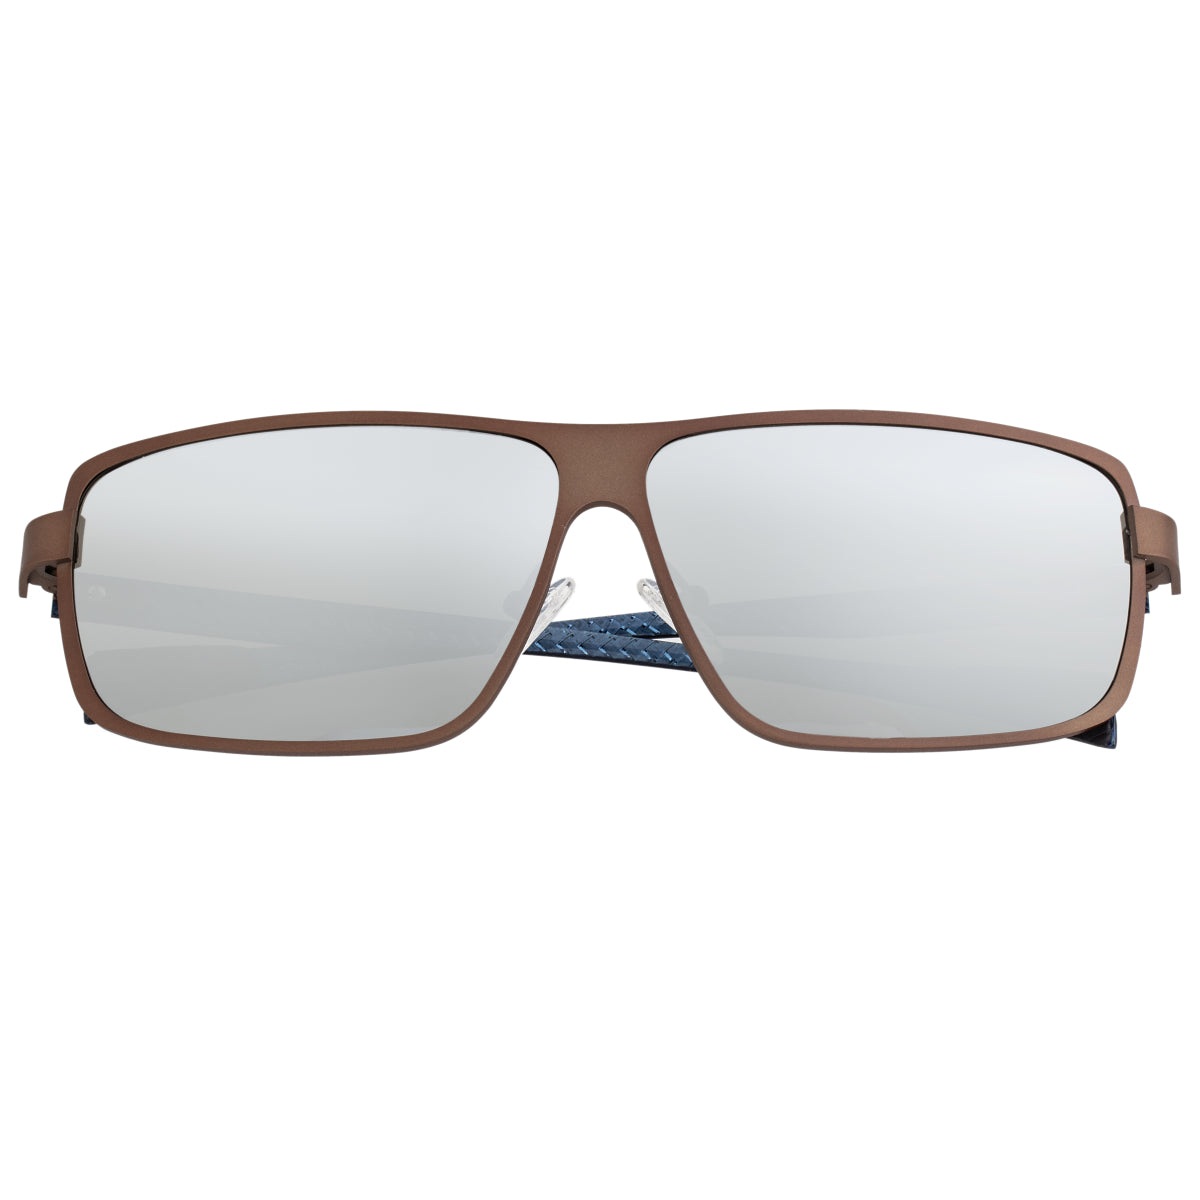 Breed Finlay Titanium Polarized Sunglasses - Brown/Silver - BSG033BN